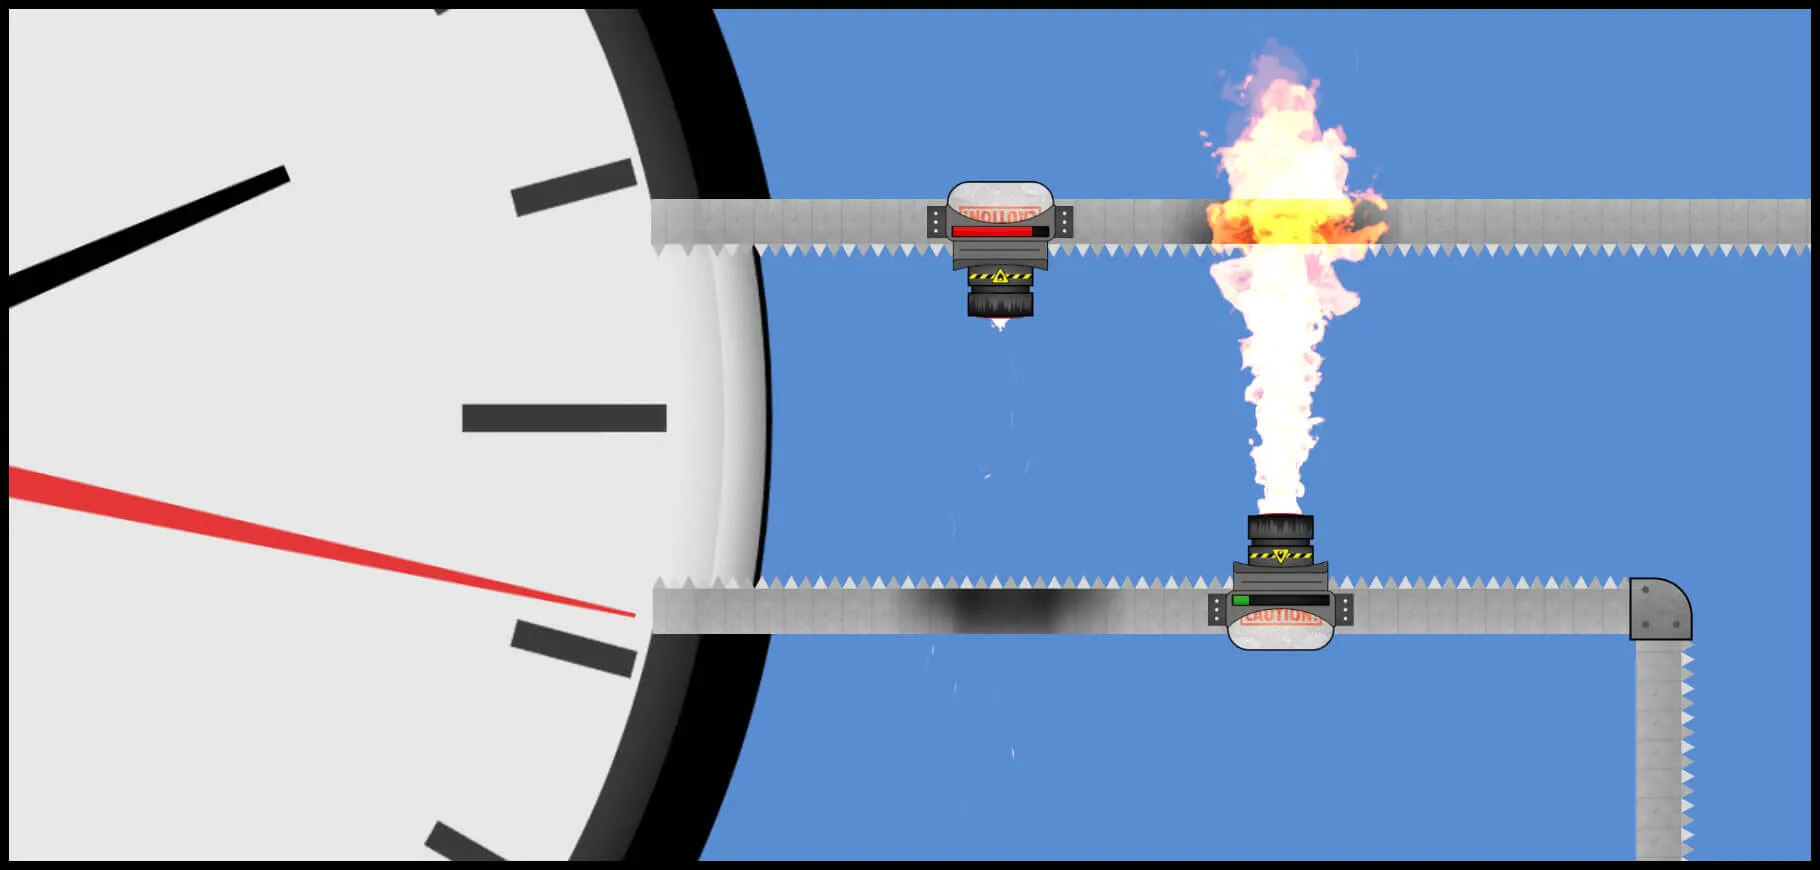 clockwork level screenshot from the game reflex runner.